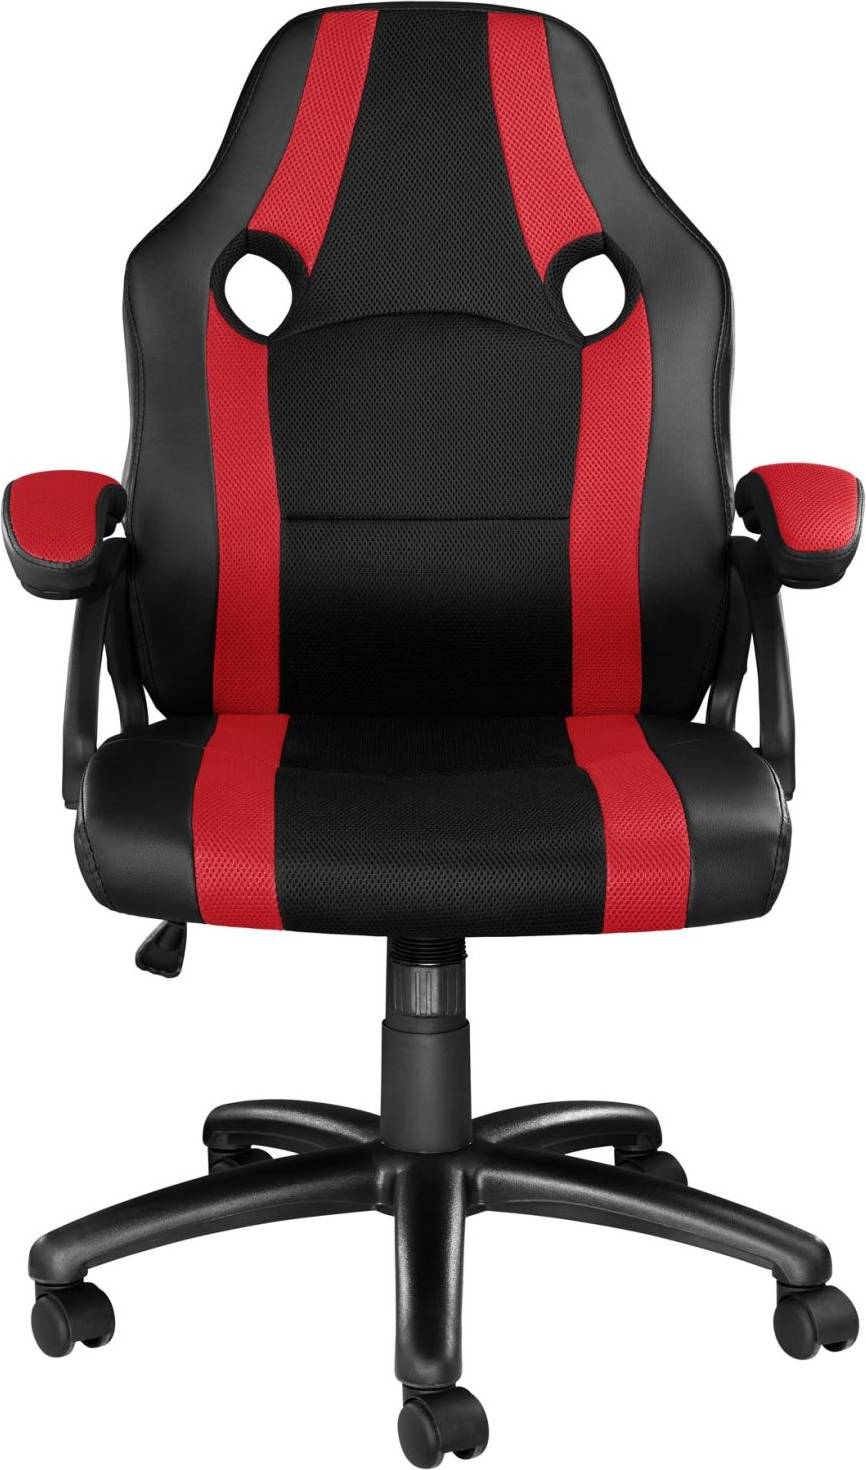  Bild på tectake Benny Gaming Chair - Black/Red gamingstol